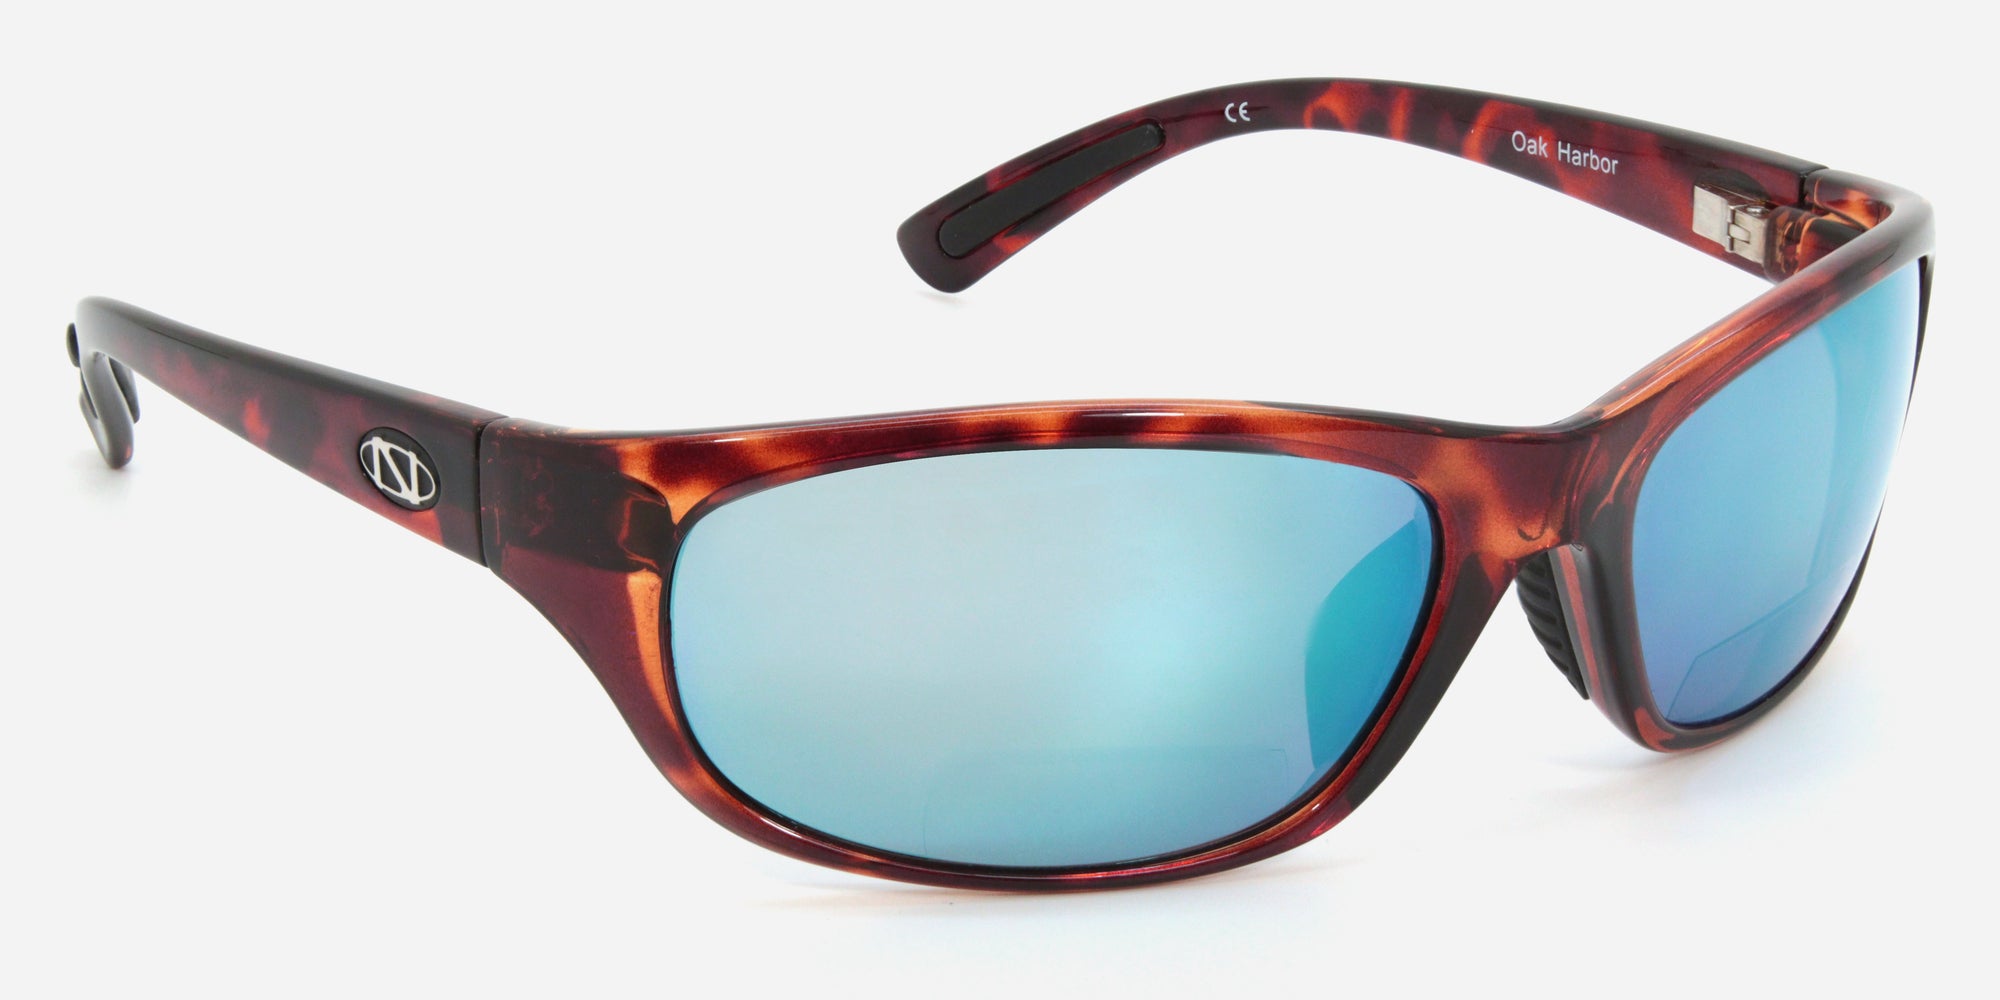 Oak Harbor Glacier - ONOS Polarized Sunglasses with Bifocal Readers - Outdoors + Fishing | Prescription Ready